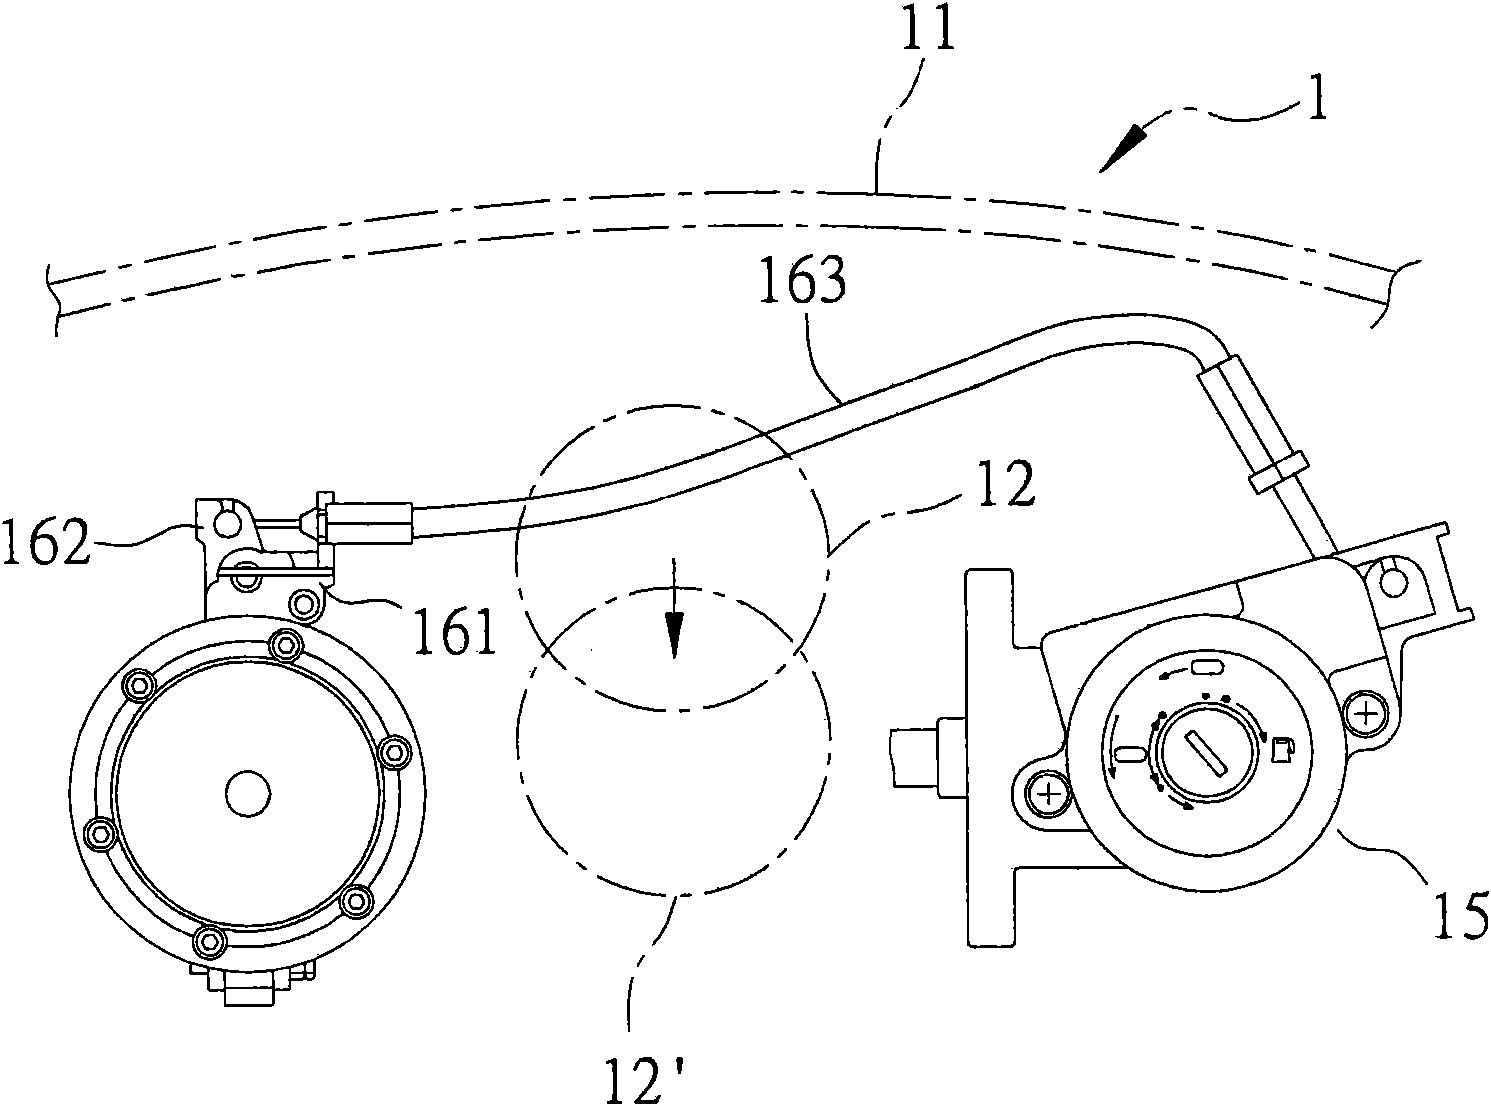 Spring-open type fuel tank lock